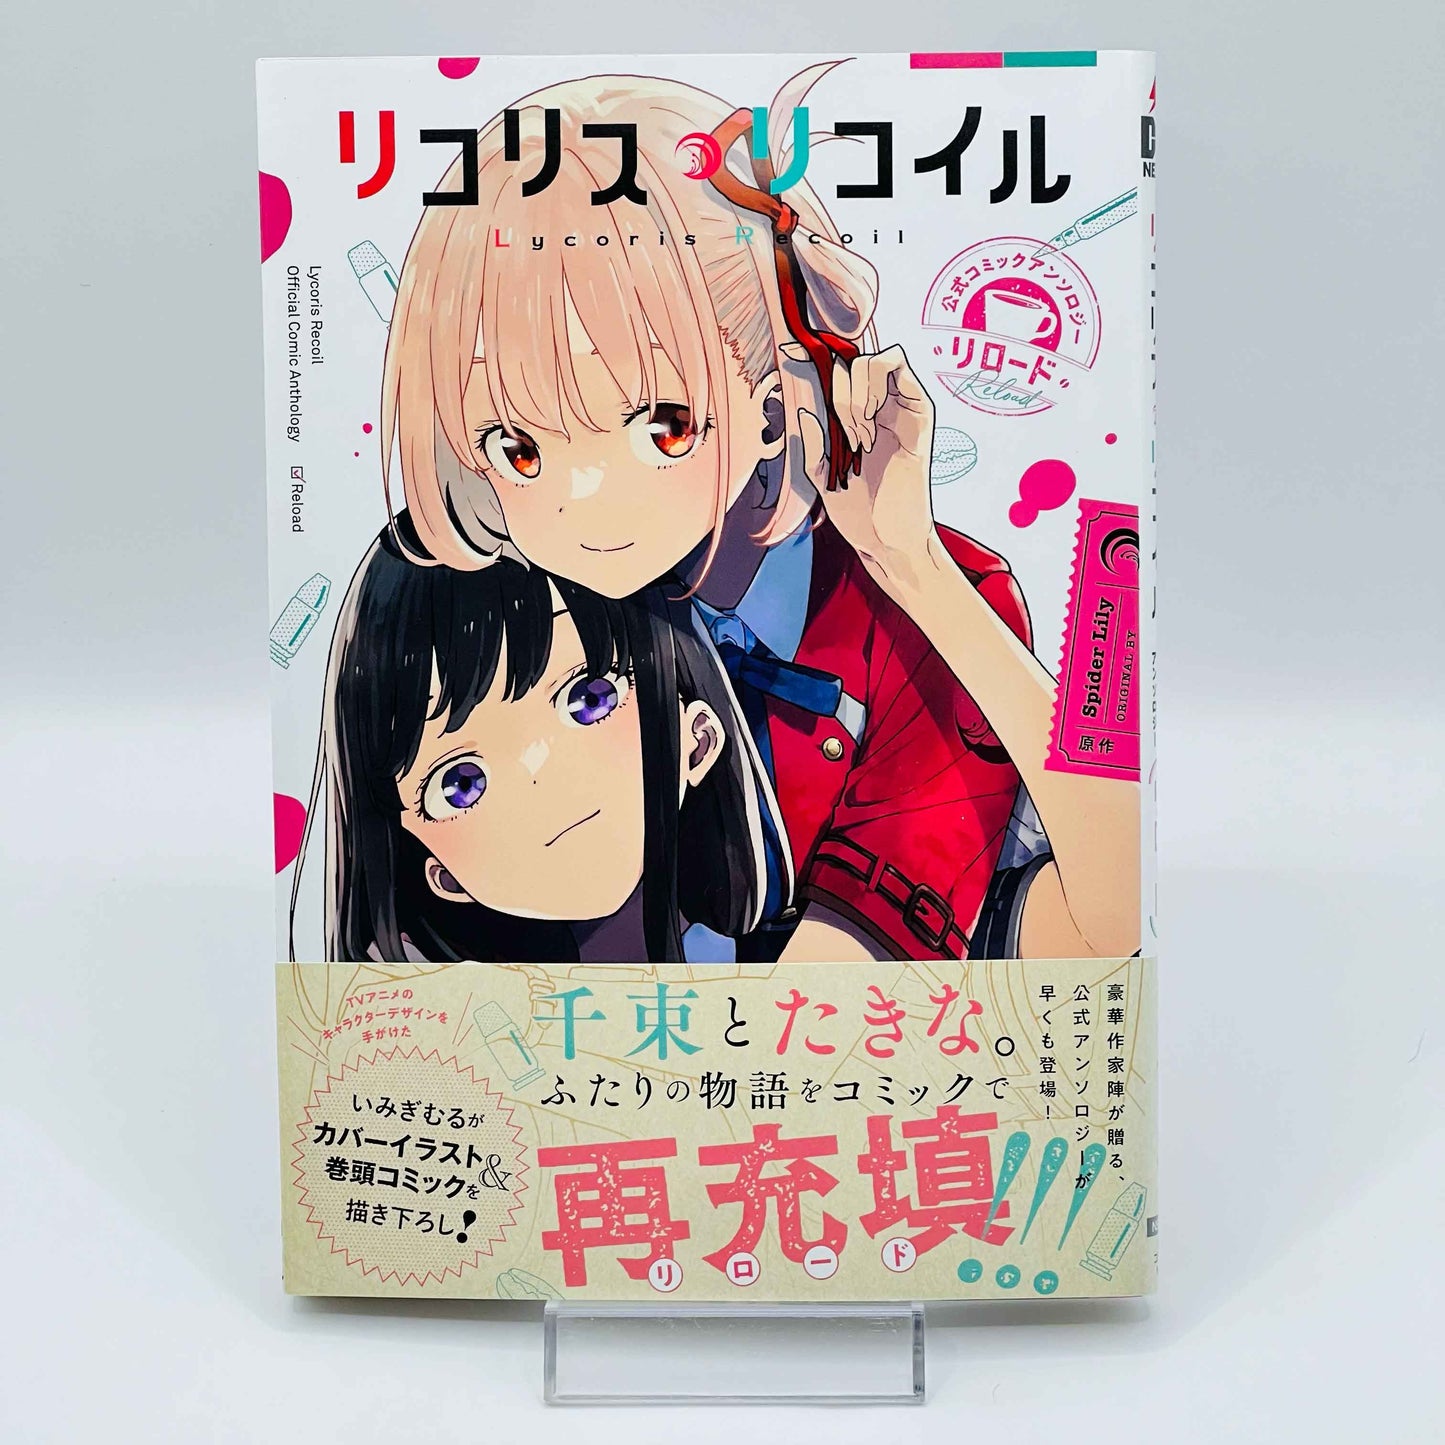 「Wish - Reserved」Lycoris Recoil + Repeat / Reload / ReAct - Volume 01 /w Obi - 1stPrint.net - 1st First Print Edition Manga Store - M-LYCORISRECOIL-LOT-001